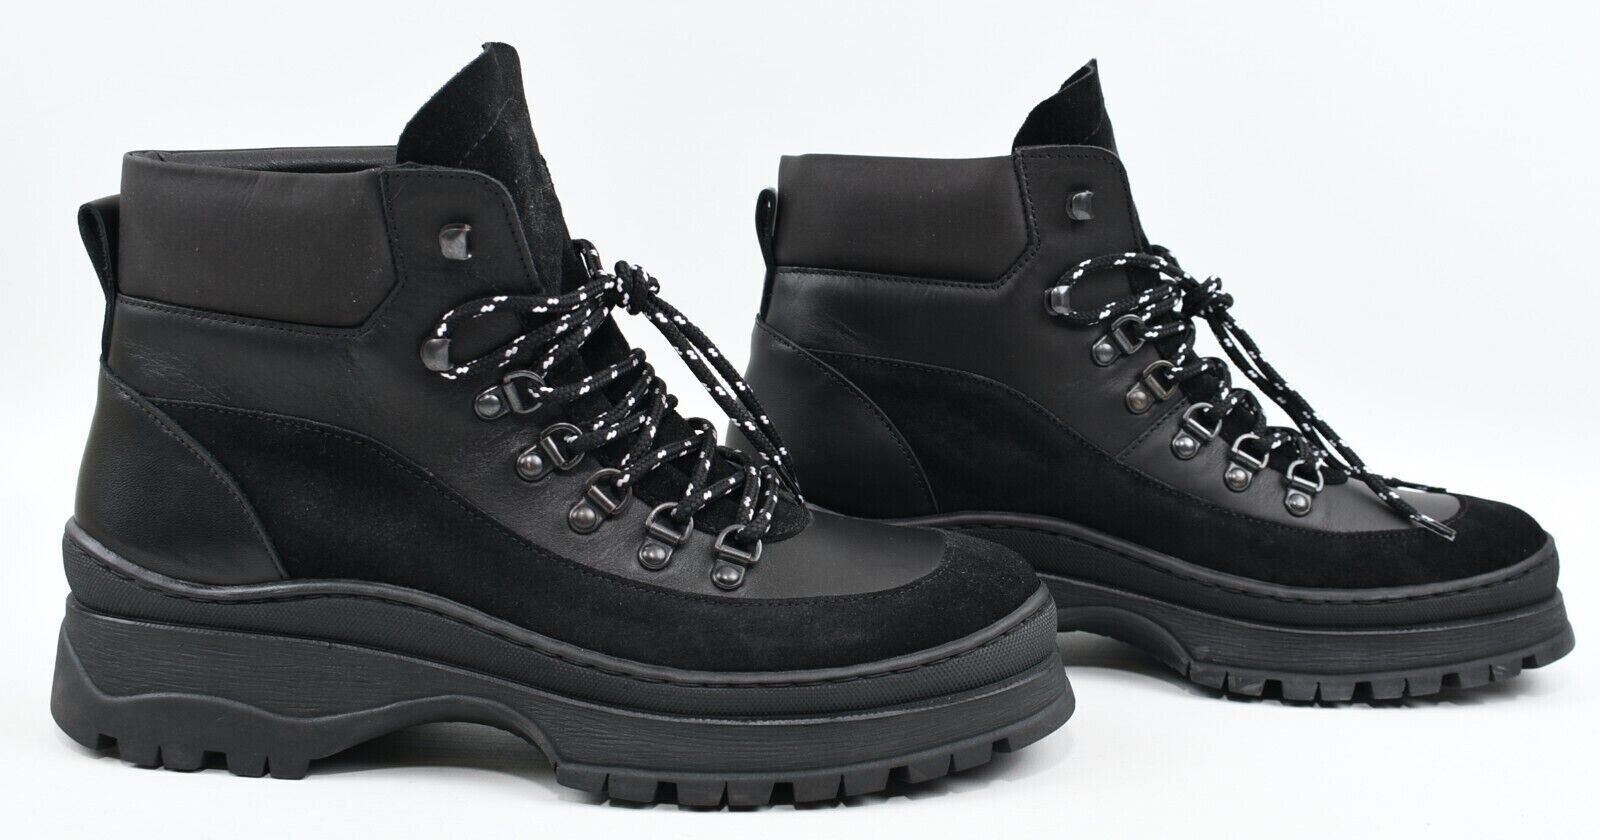 TED BAKER Men's WESTONN Leather Hiker Boots, Black, size UK 10 /EU 44